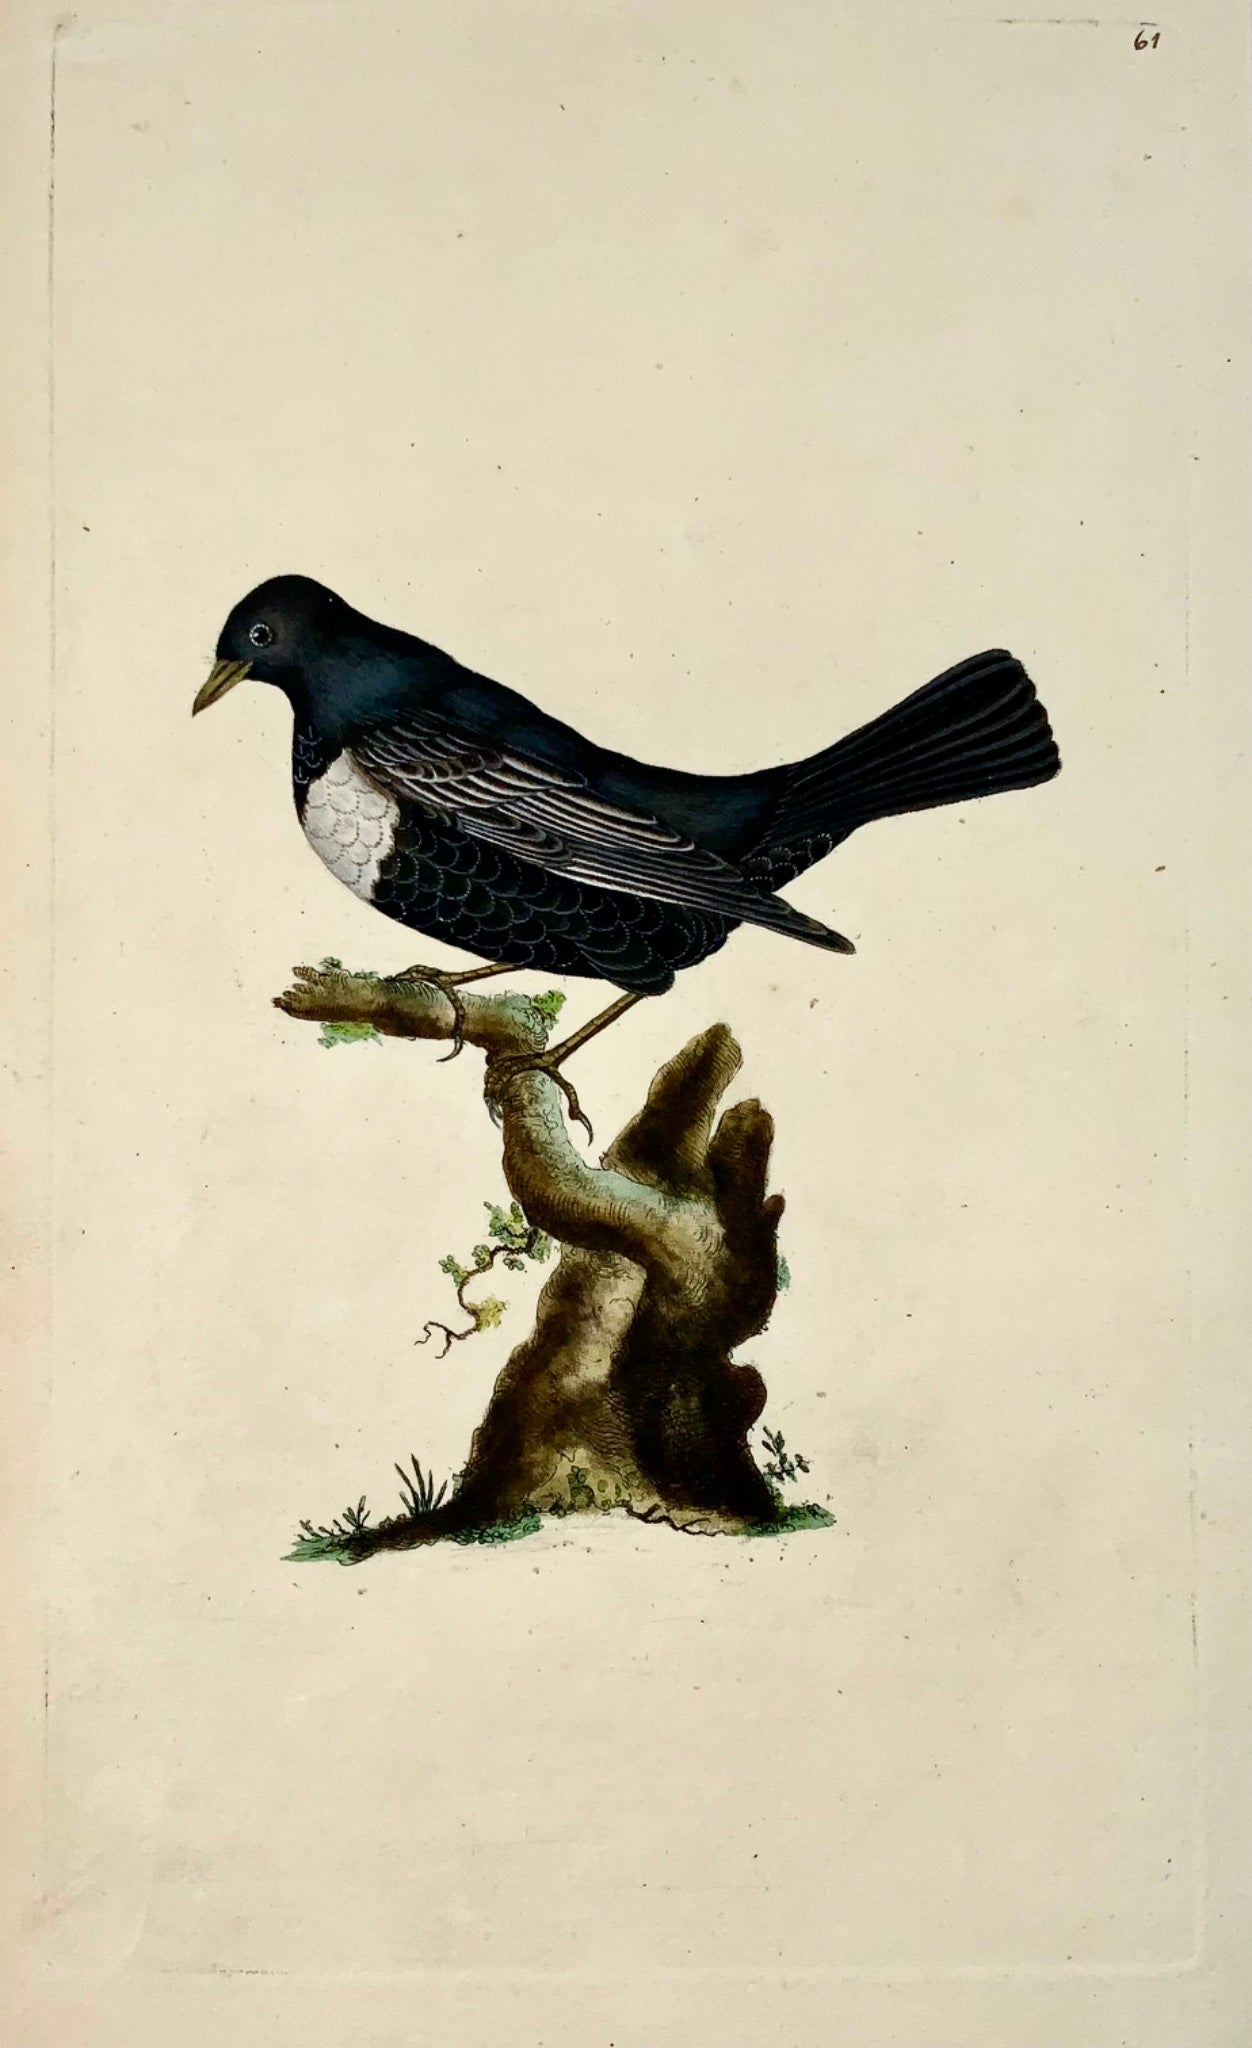 1794 Edward Donovan, Water Ouzel, ornithology, hand coloured copper engraving